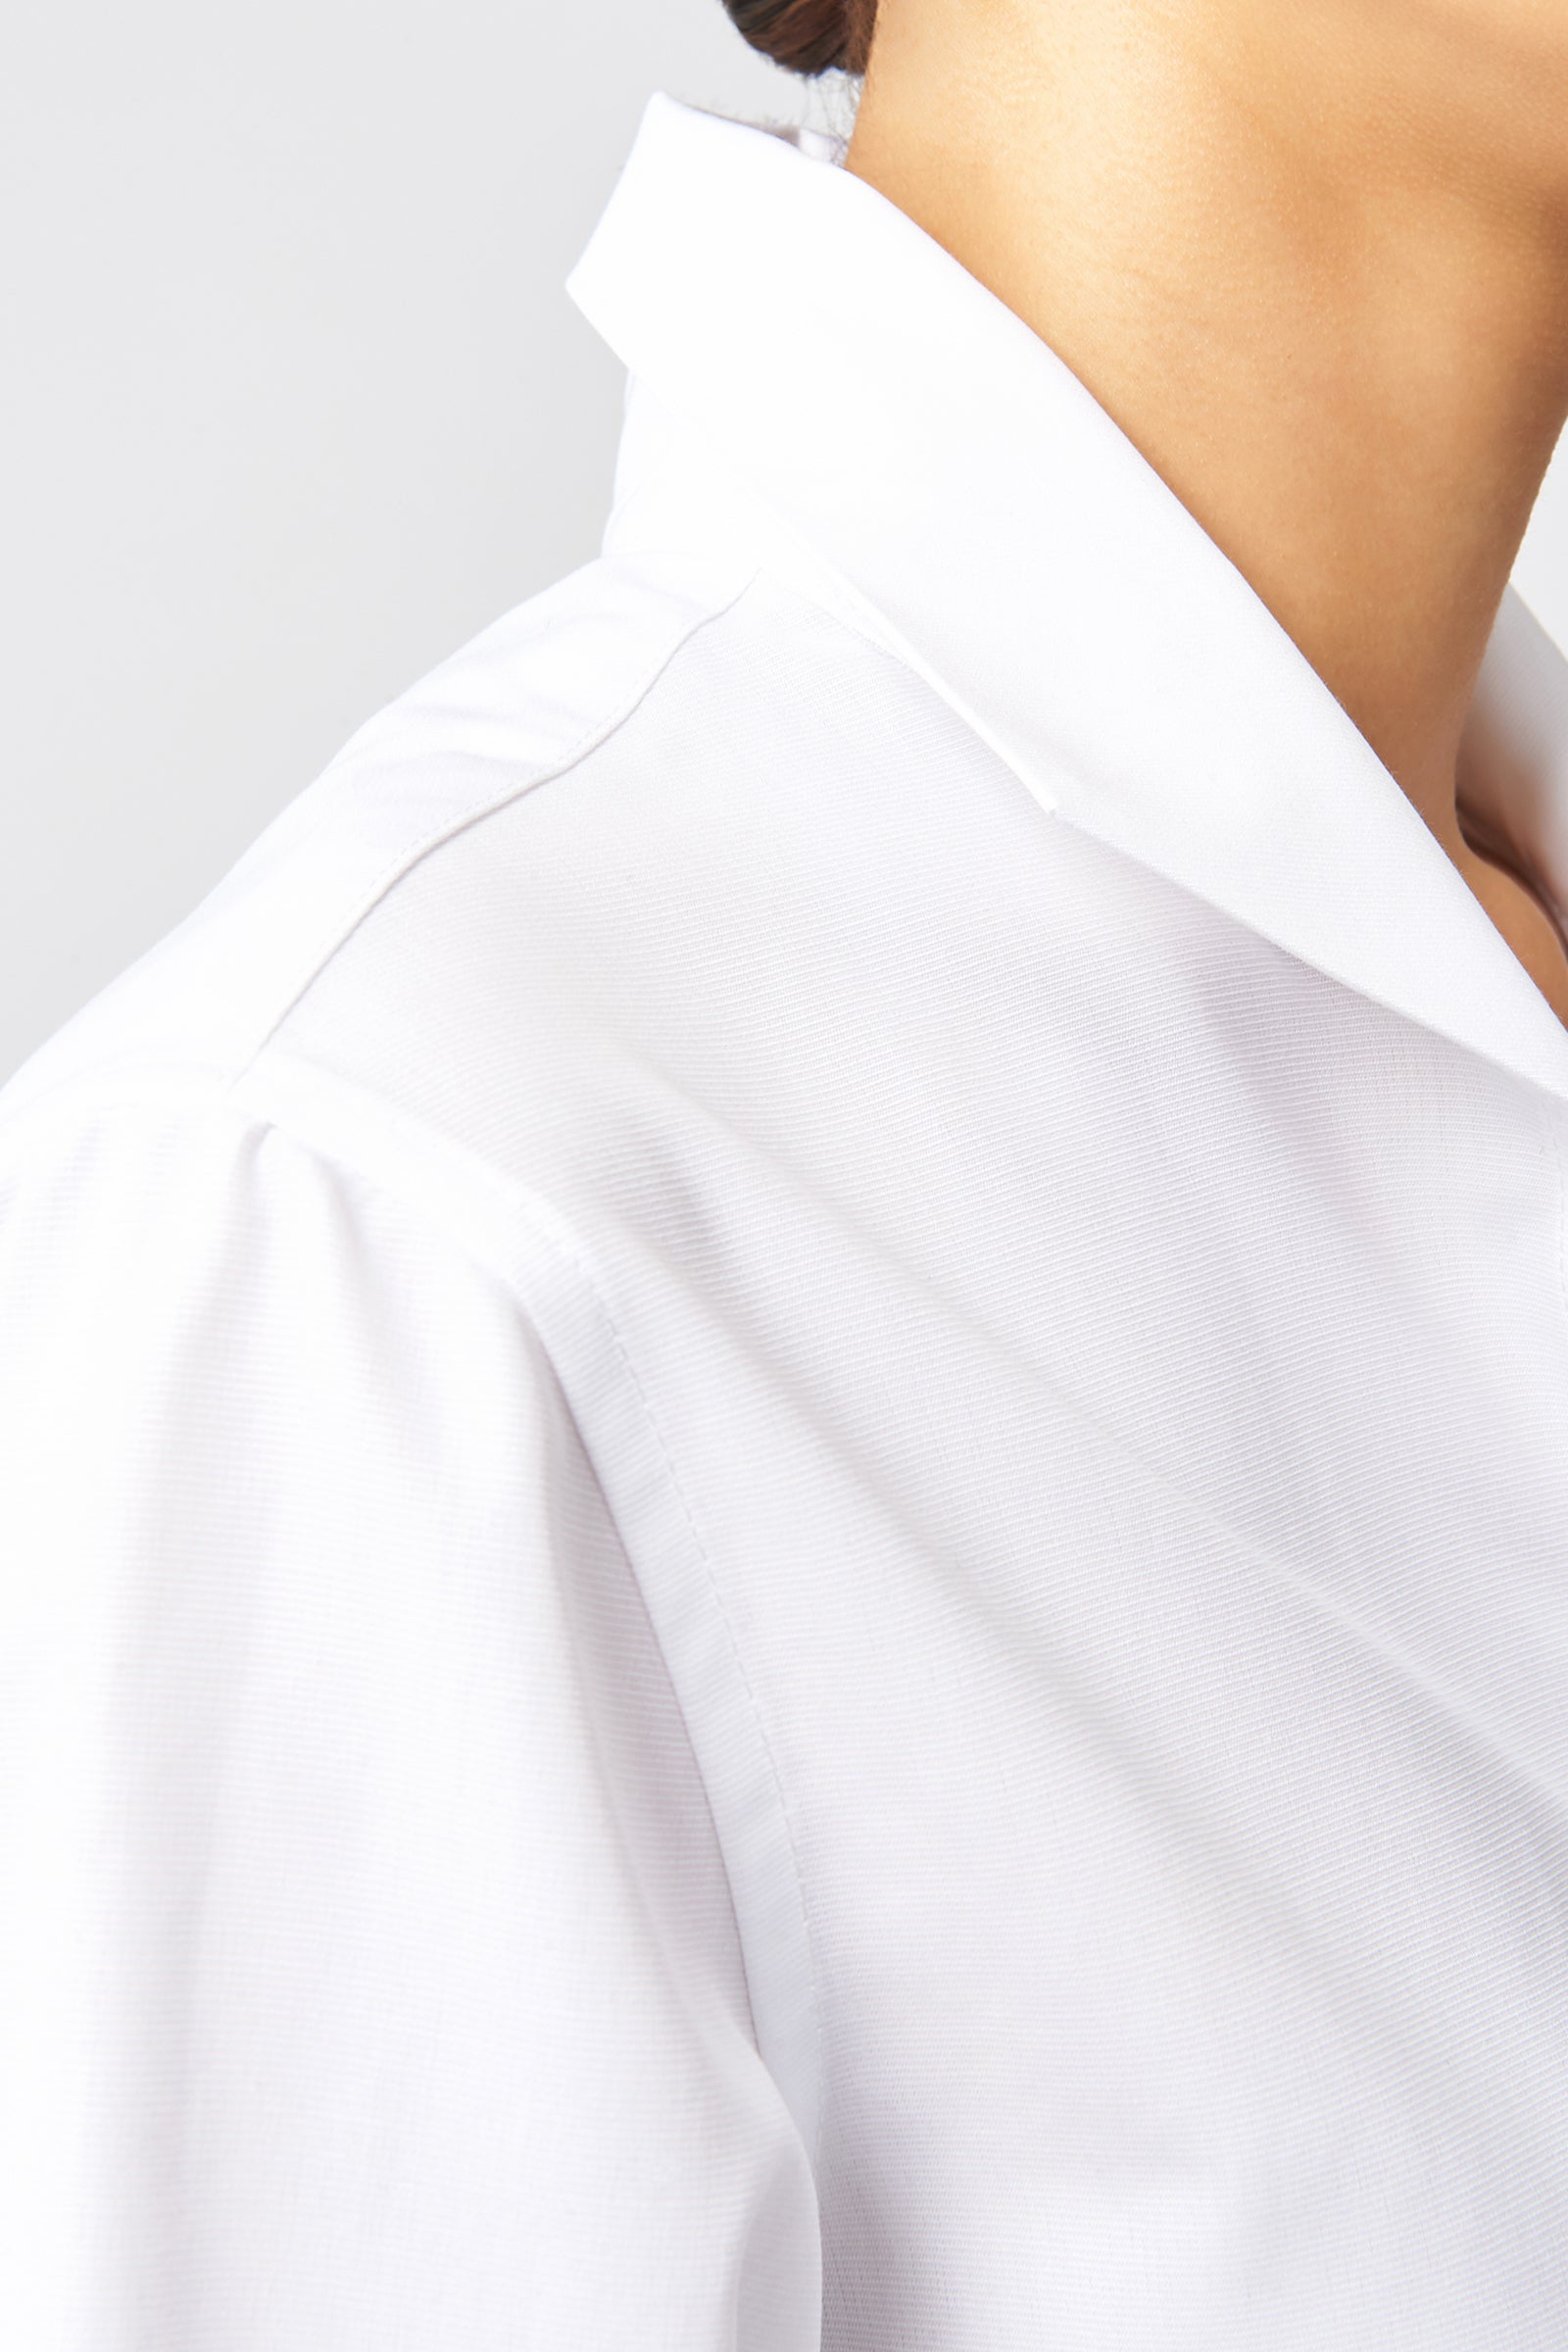 Kal Rieman Ginna Box Pleat Shirt in White Ottoman on Model Detail View